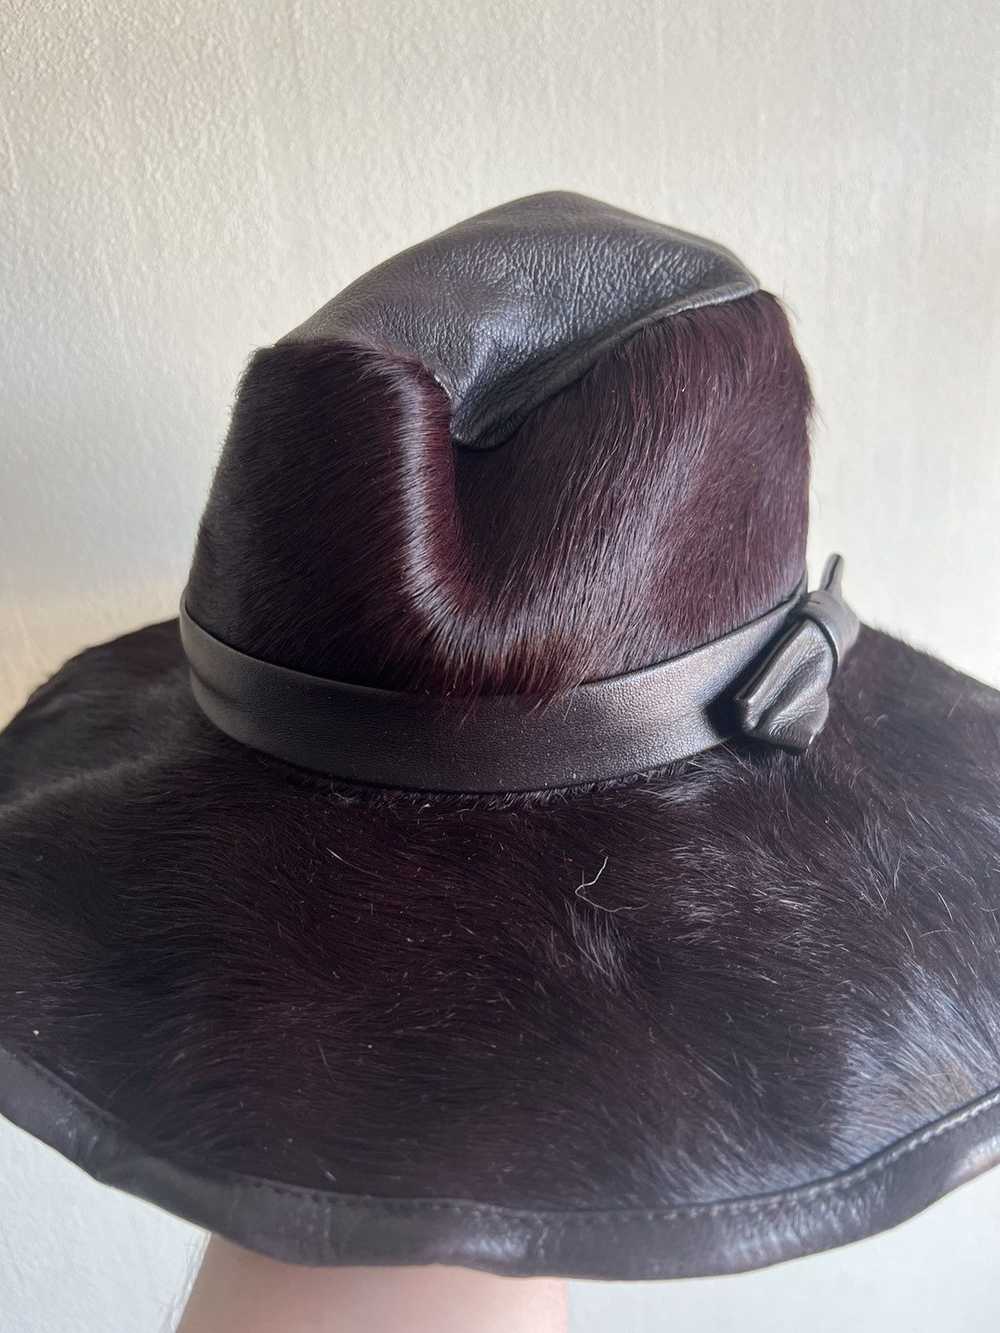 Acne Studios Acne Studios Brown Leather & Fur Hat - image 3